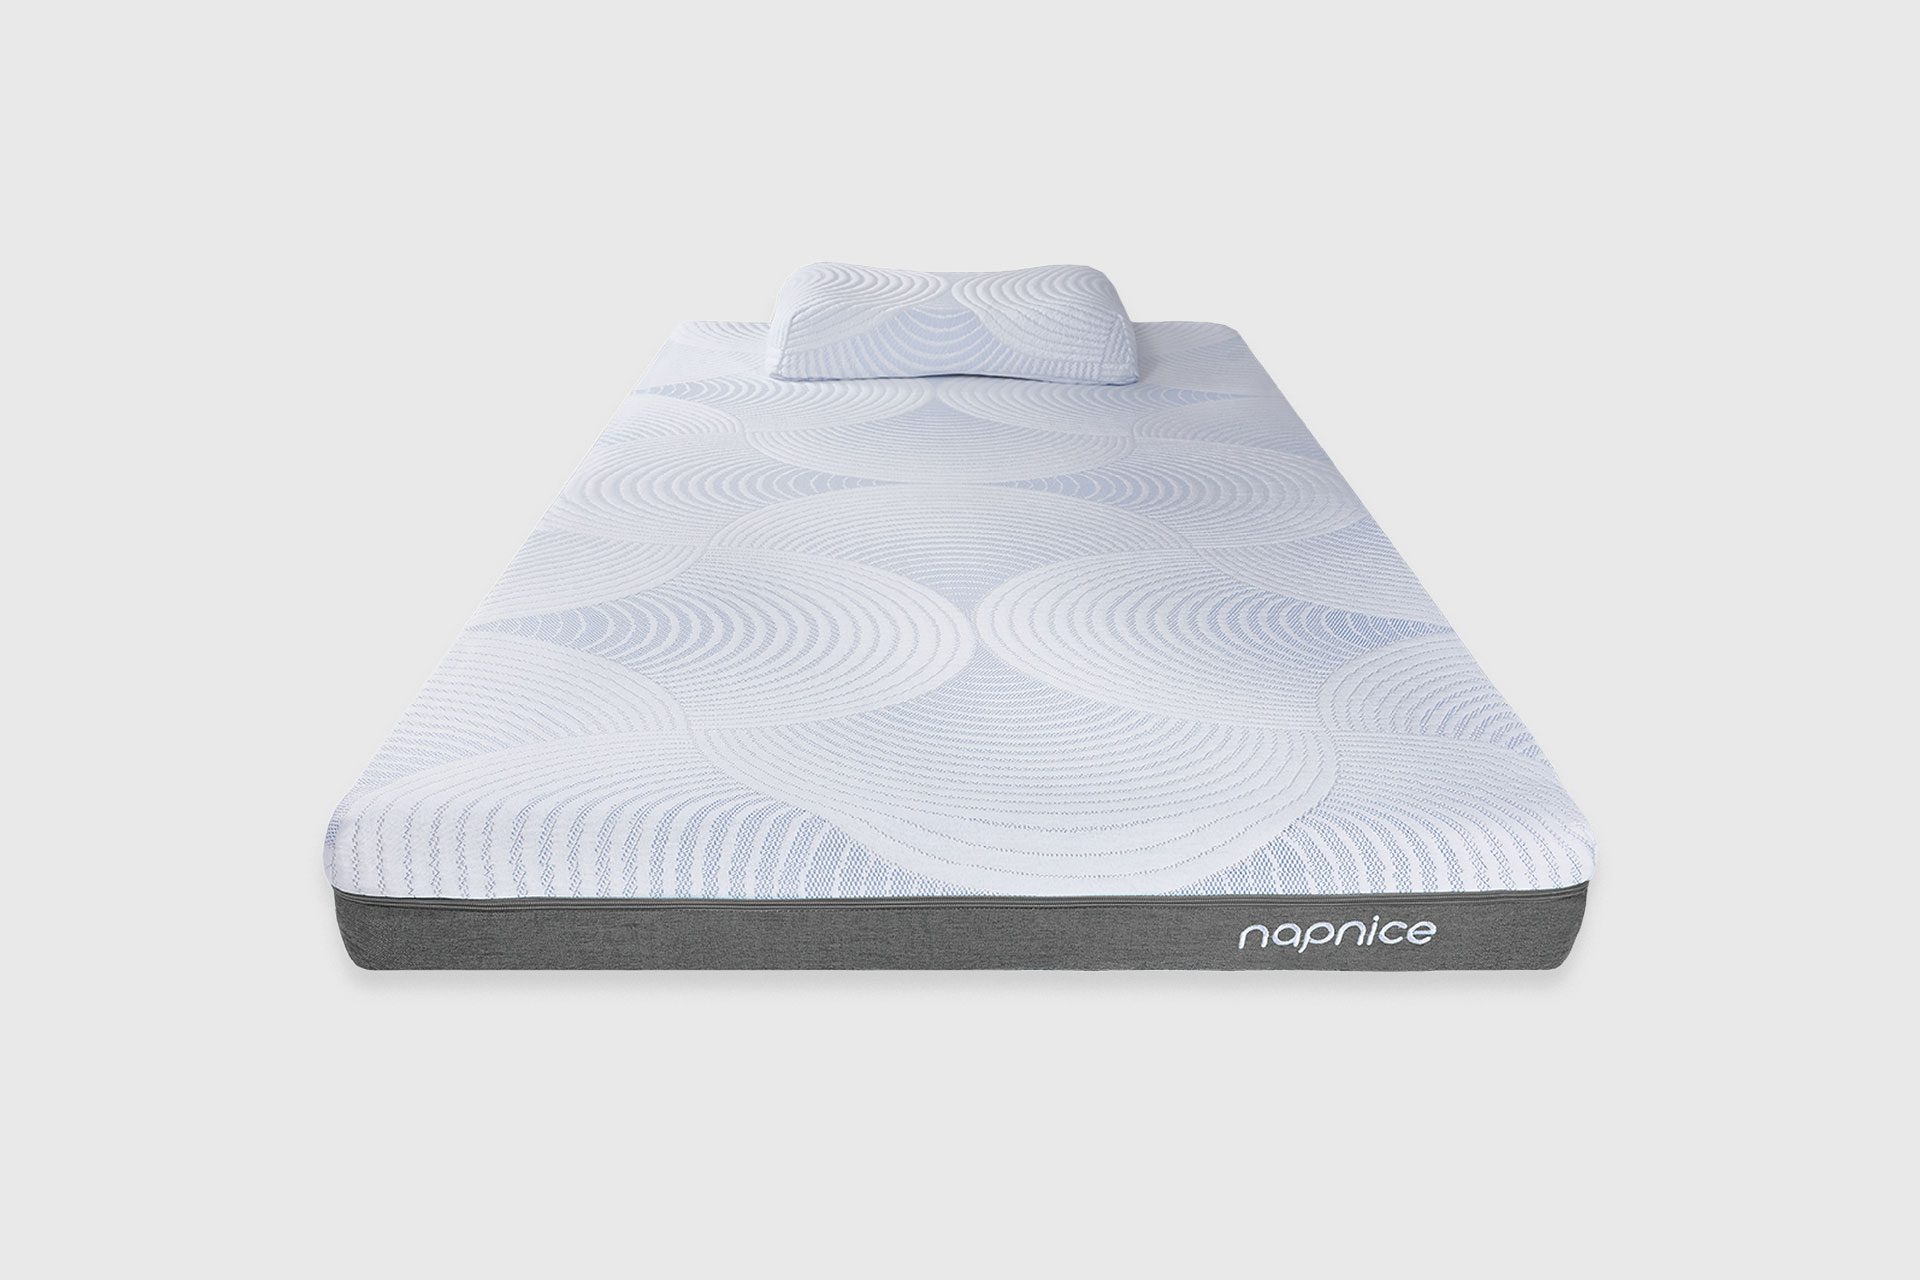 6 inch napnice medium mattress (76 x 152 cm) was $4,780